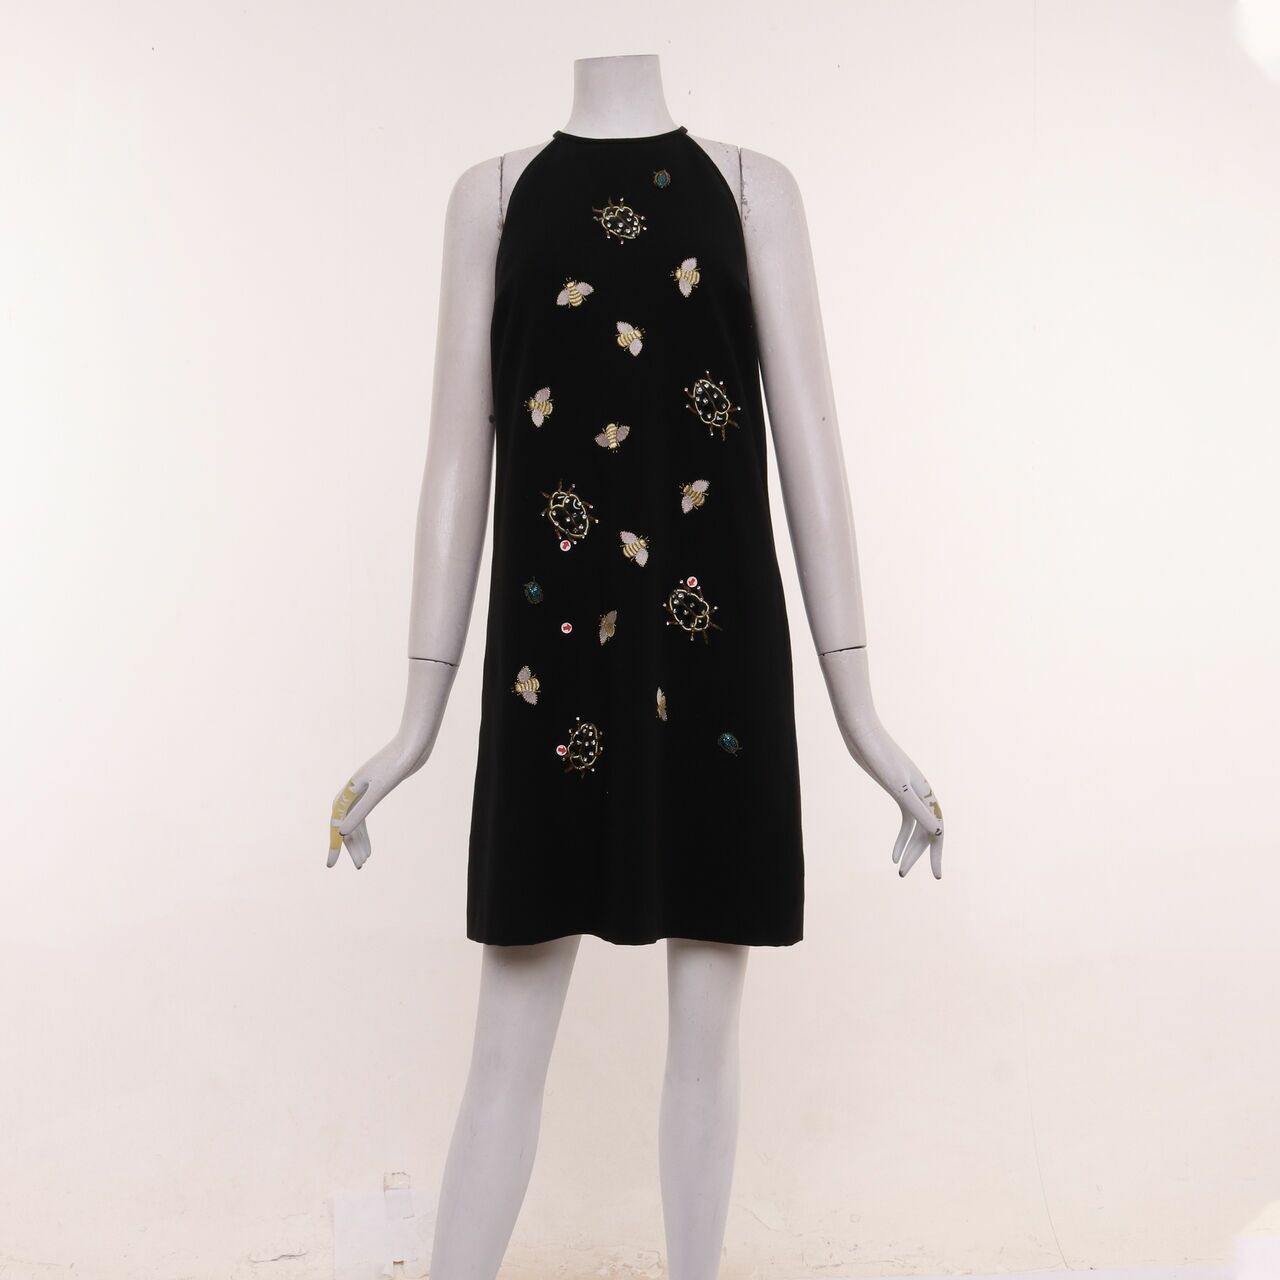 Victoria Beckham For Target Black Mini Dress